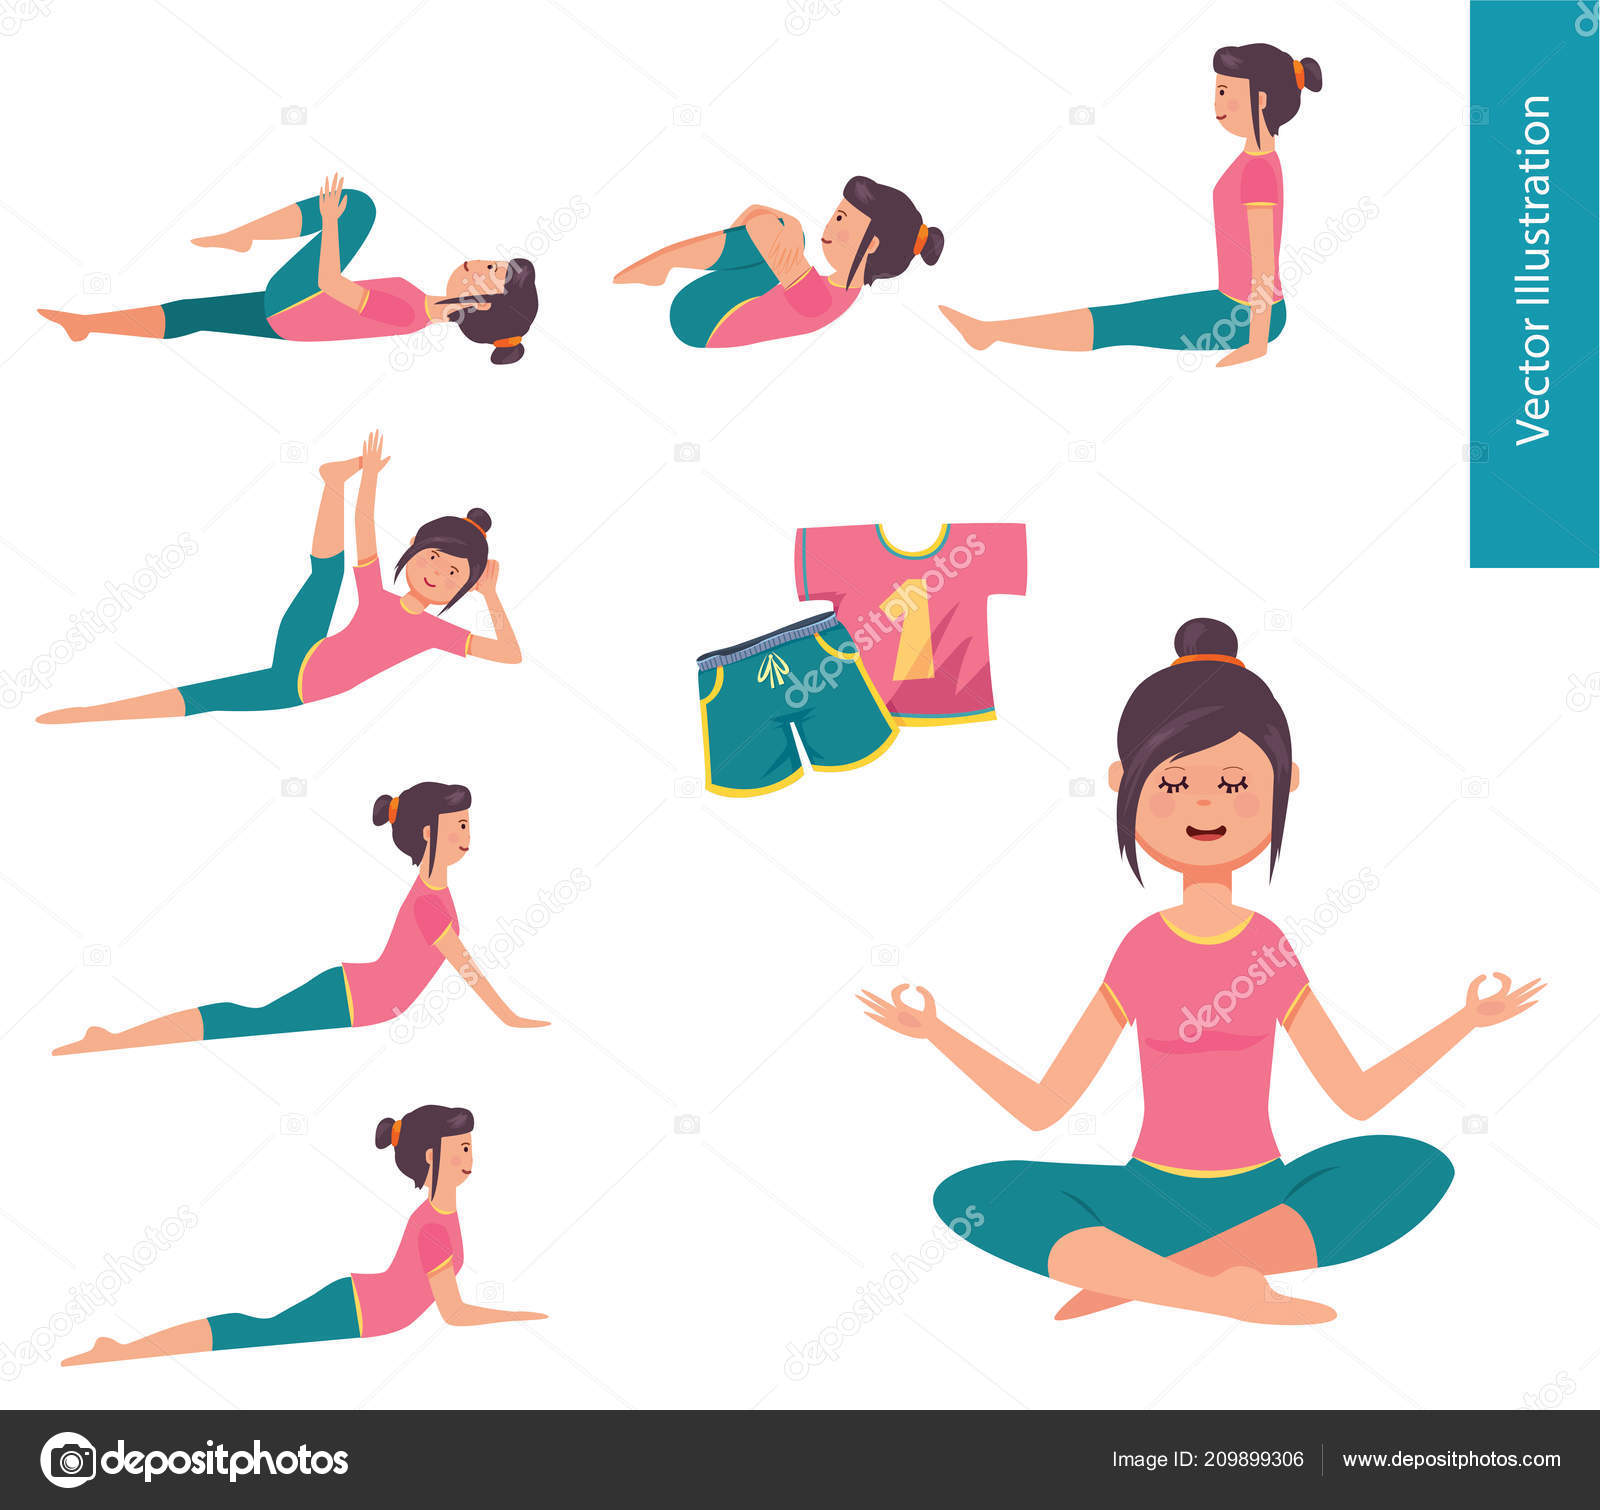 Shoulders and Hips: A Power Vinyasa Sequence | Lisa Rigby Yoga